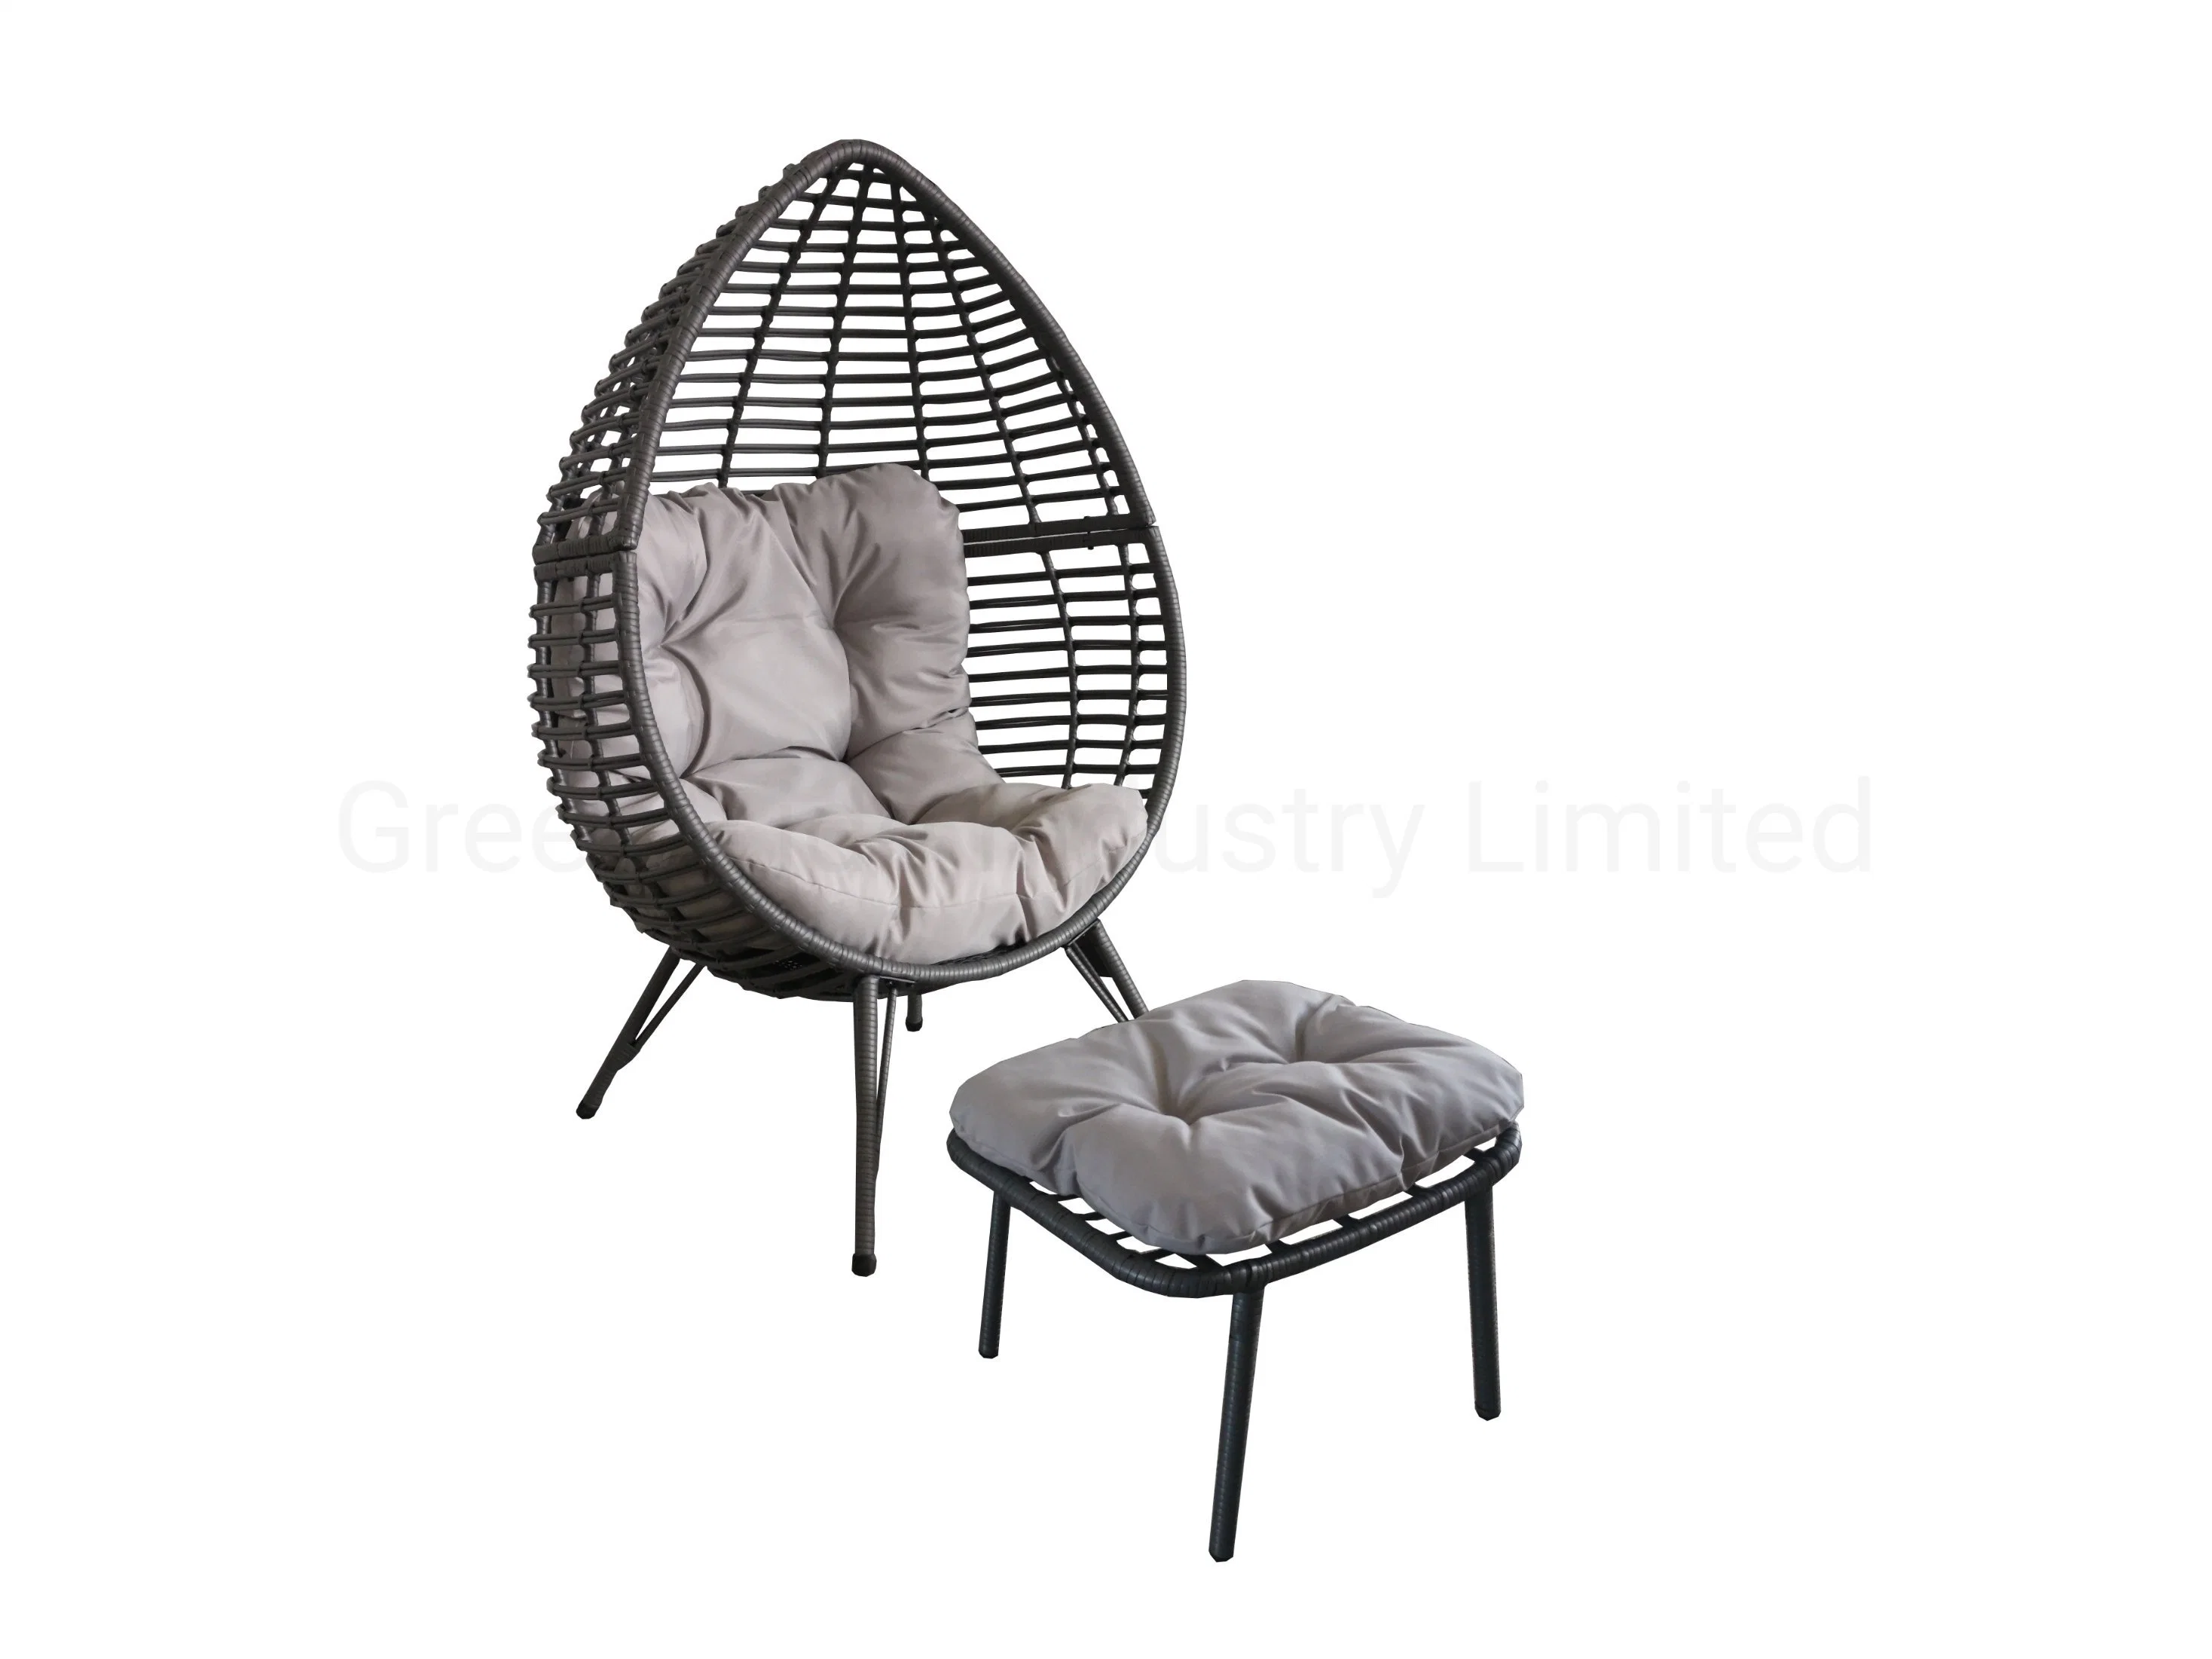 New Outdoor Furniture Garden Furniture Rattan Kd Steel Chair with Footrest